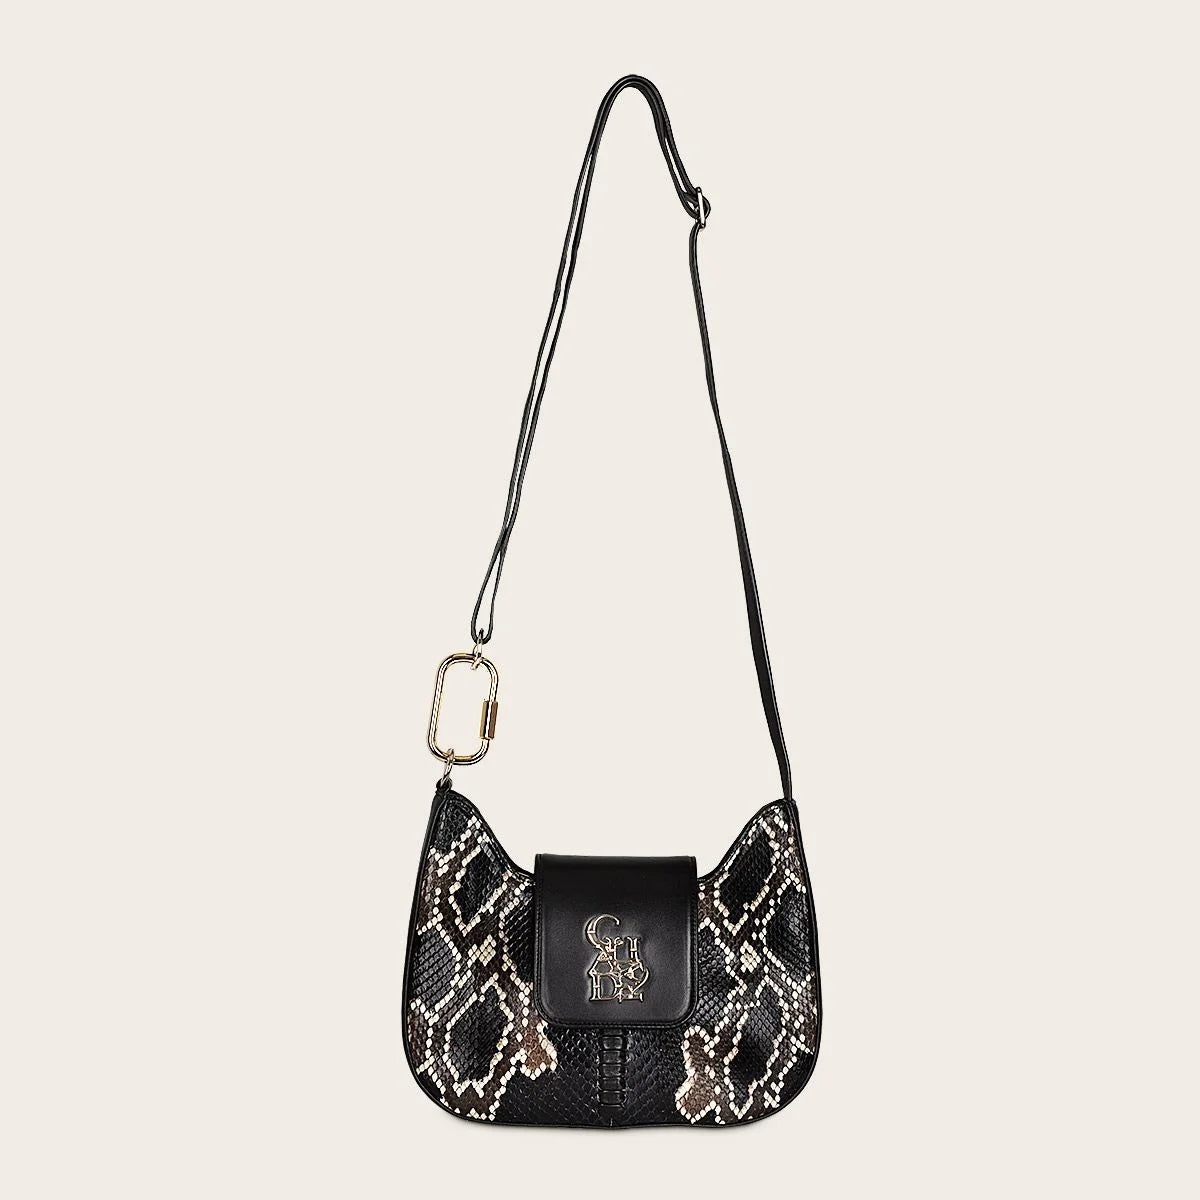 Black exotic leather shoulder bag with handmade interweaving detail